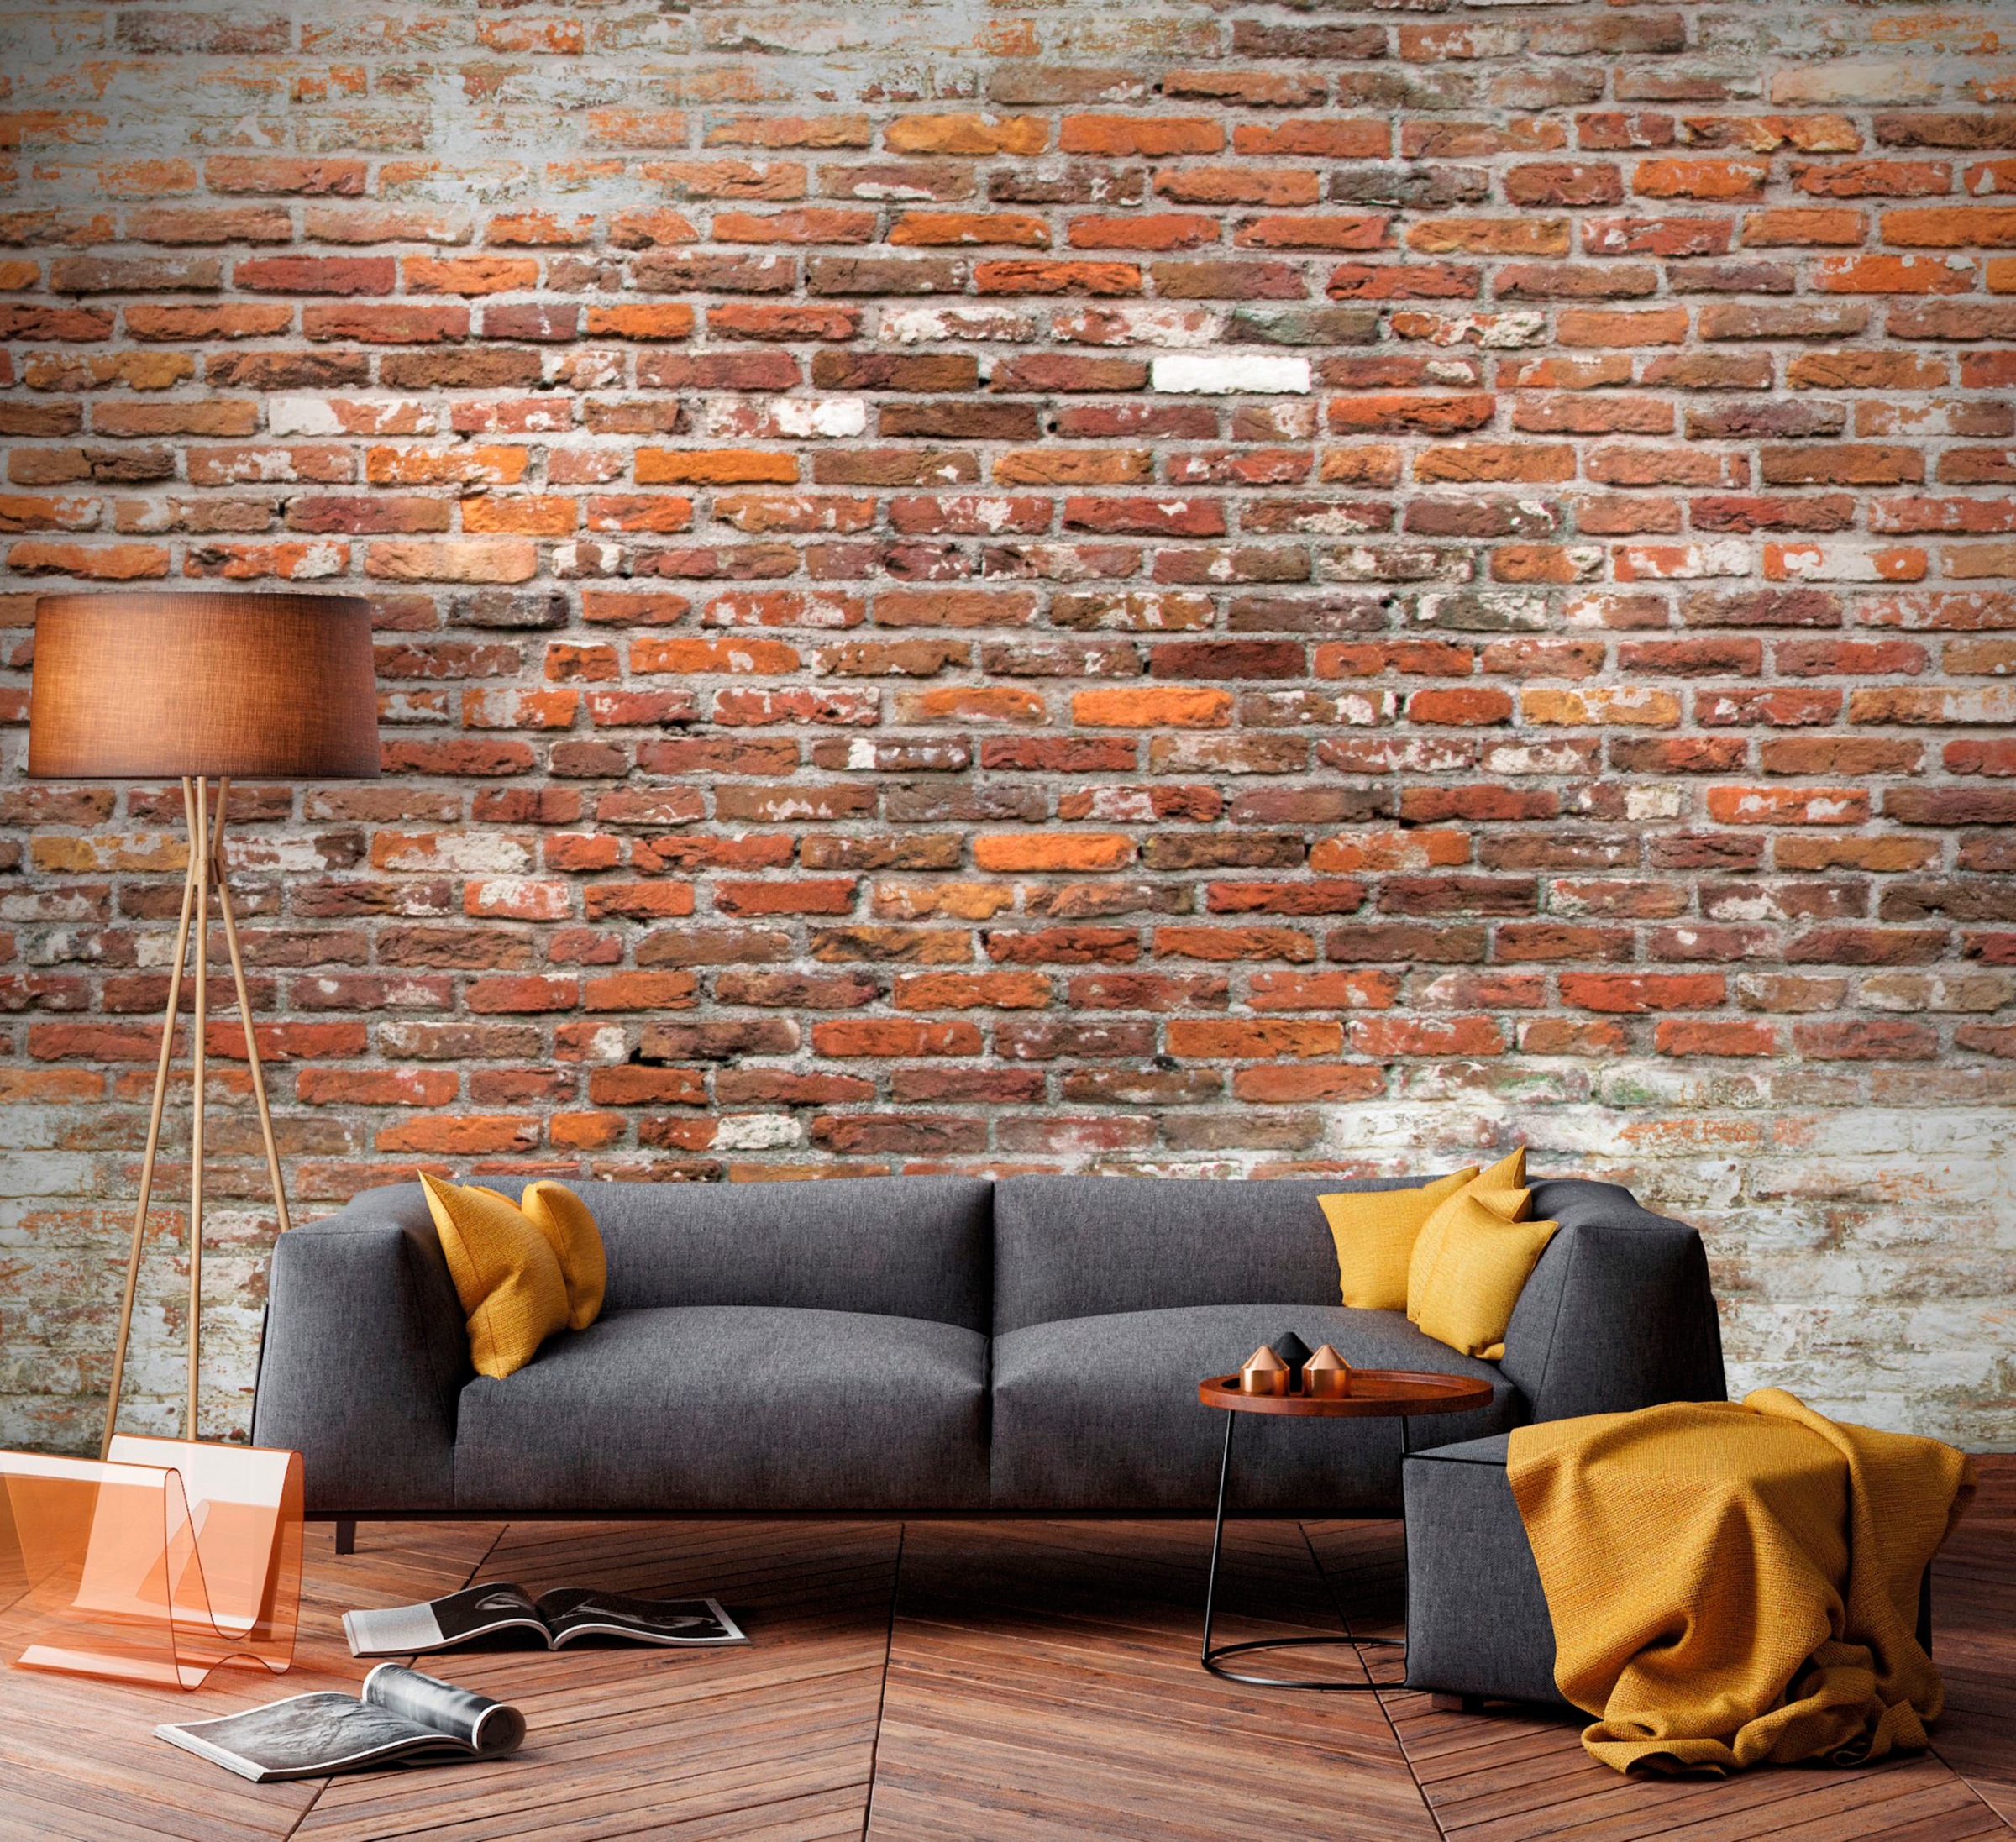 Art for the home Fototapete »Brick wall 2«, 300 cm Länge